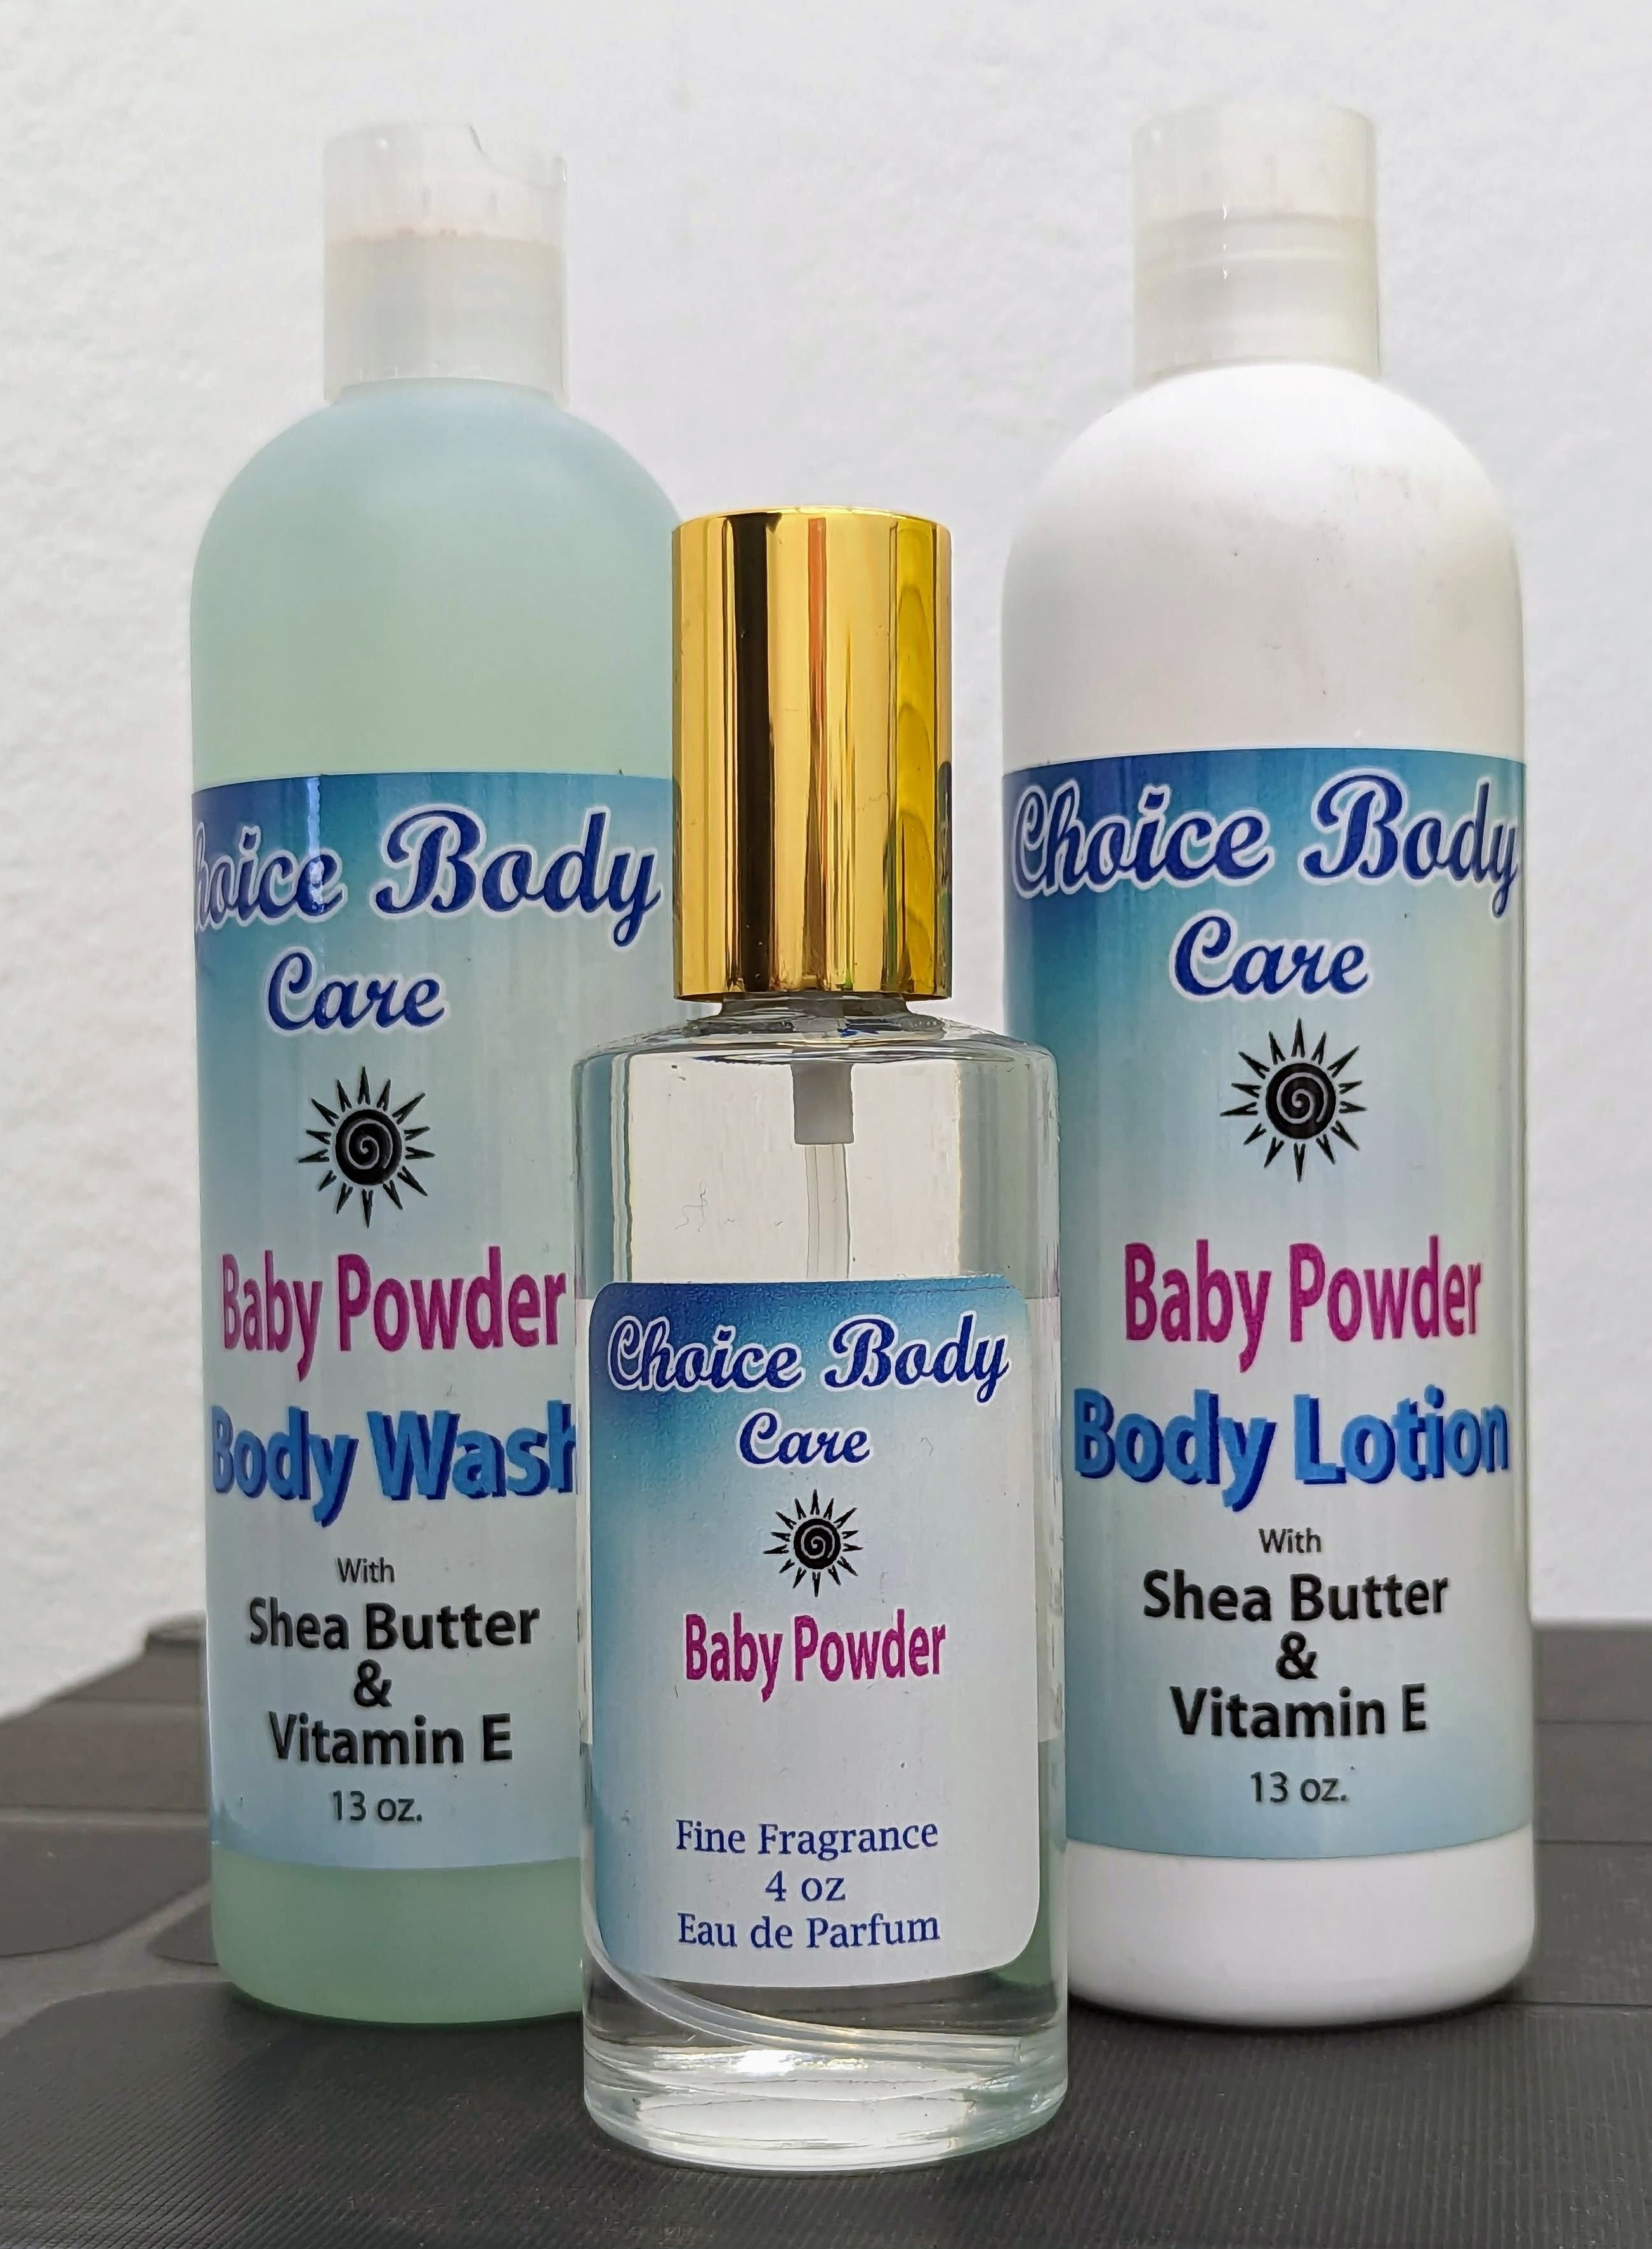 Baby Powder Body Butter